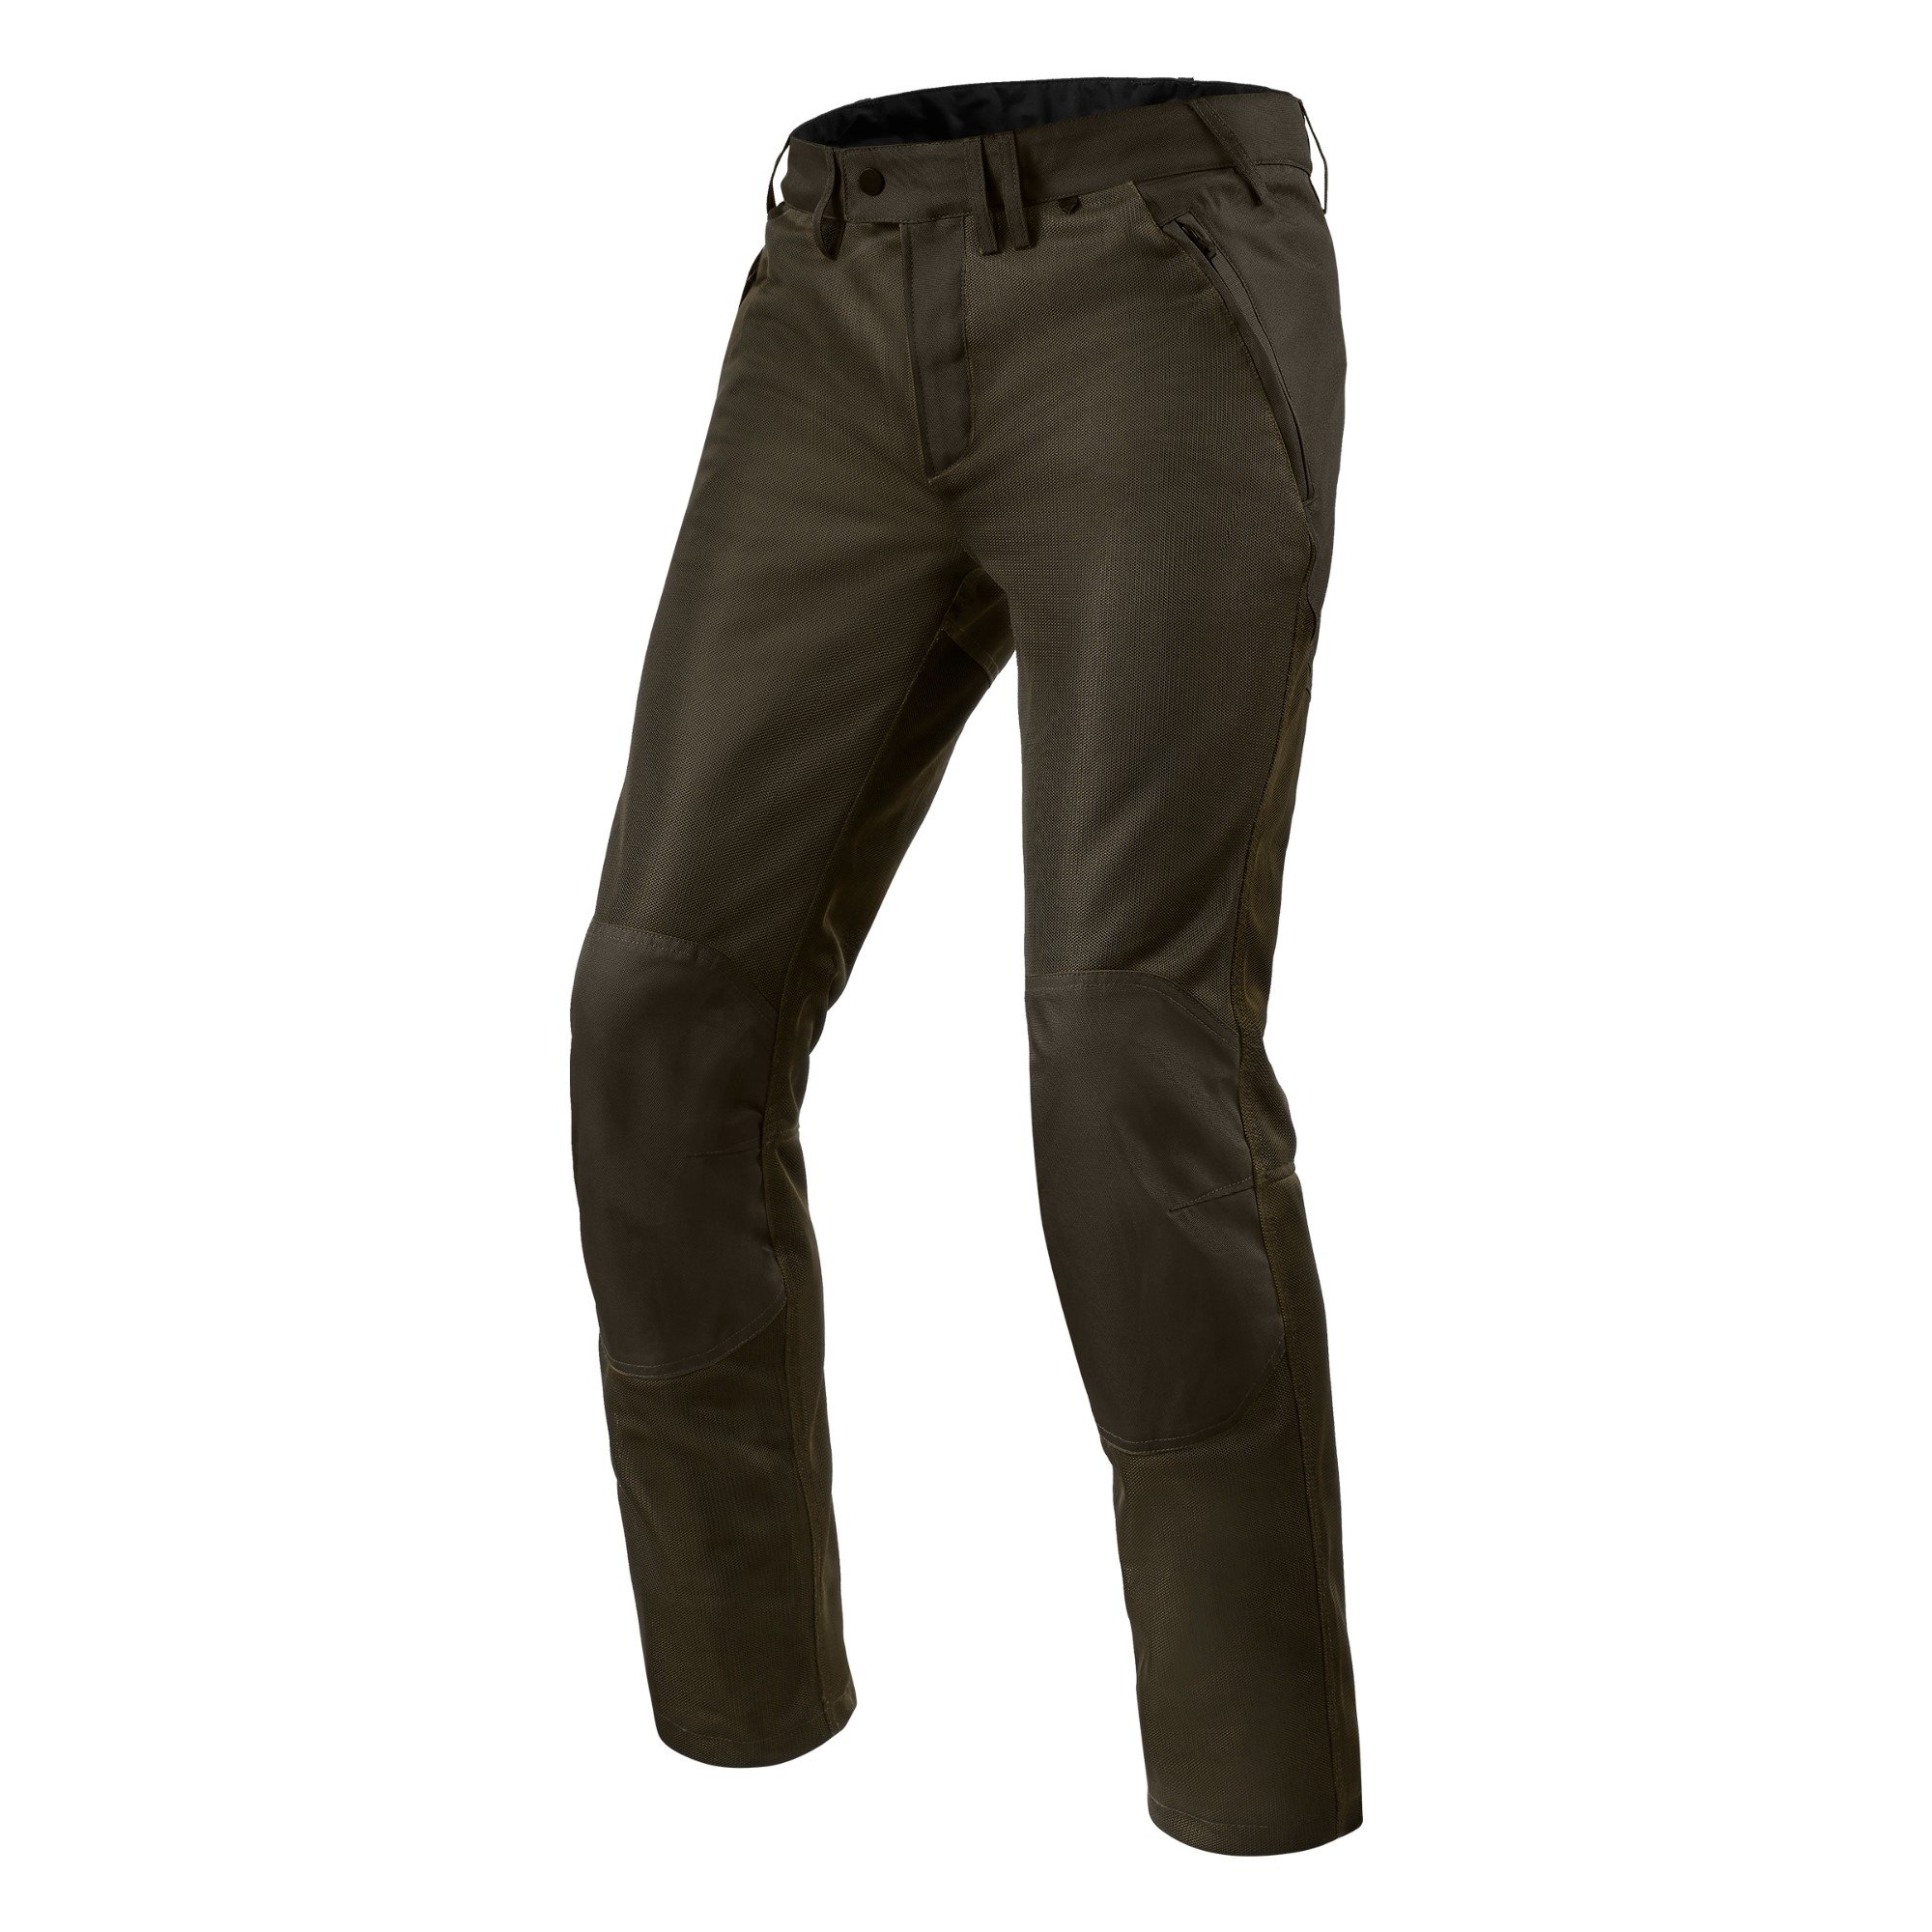 Image of REV'IT! Pants Eclipse 2 Black Olive Short Motorcycle Pants Size 2XL ID 8700001368827